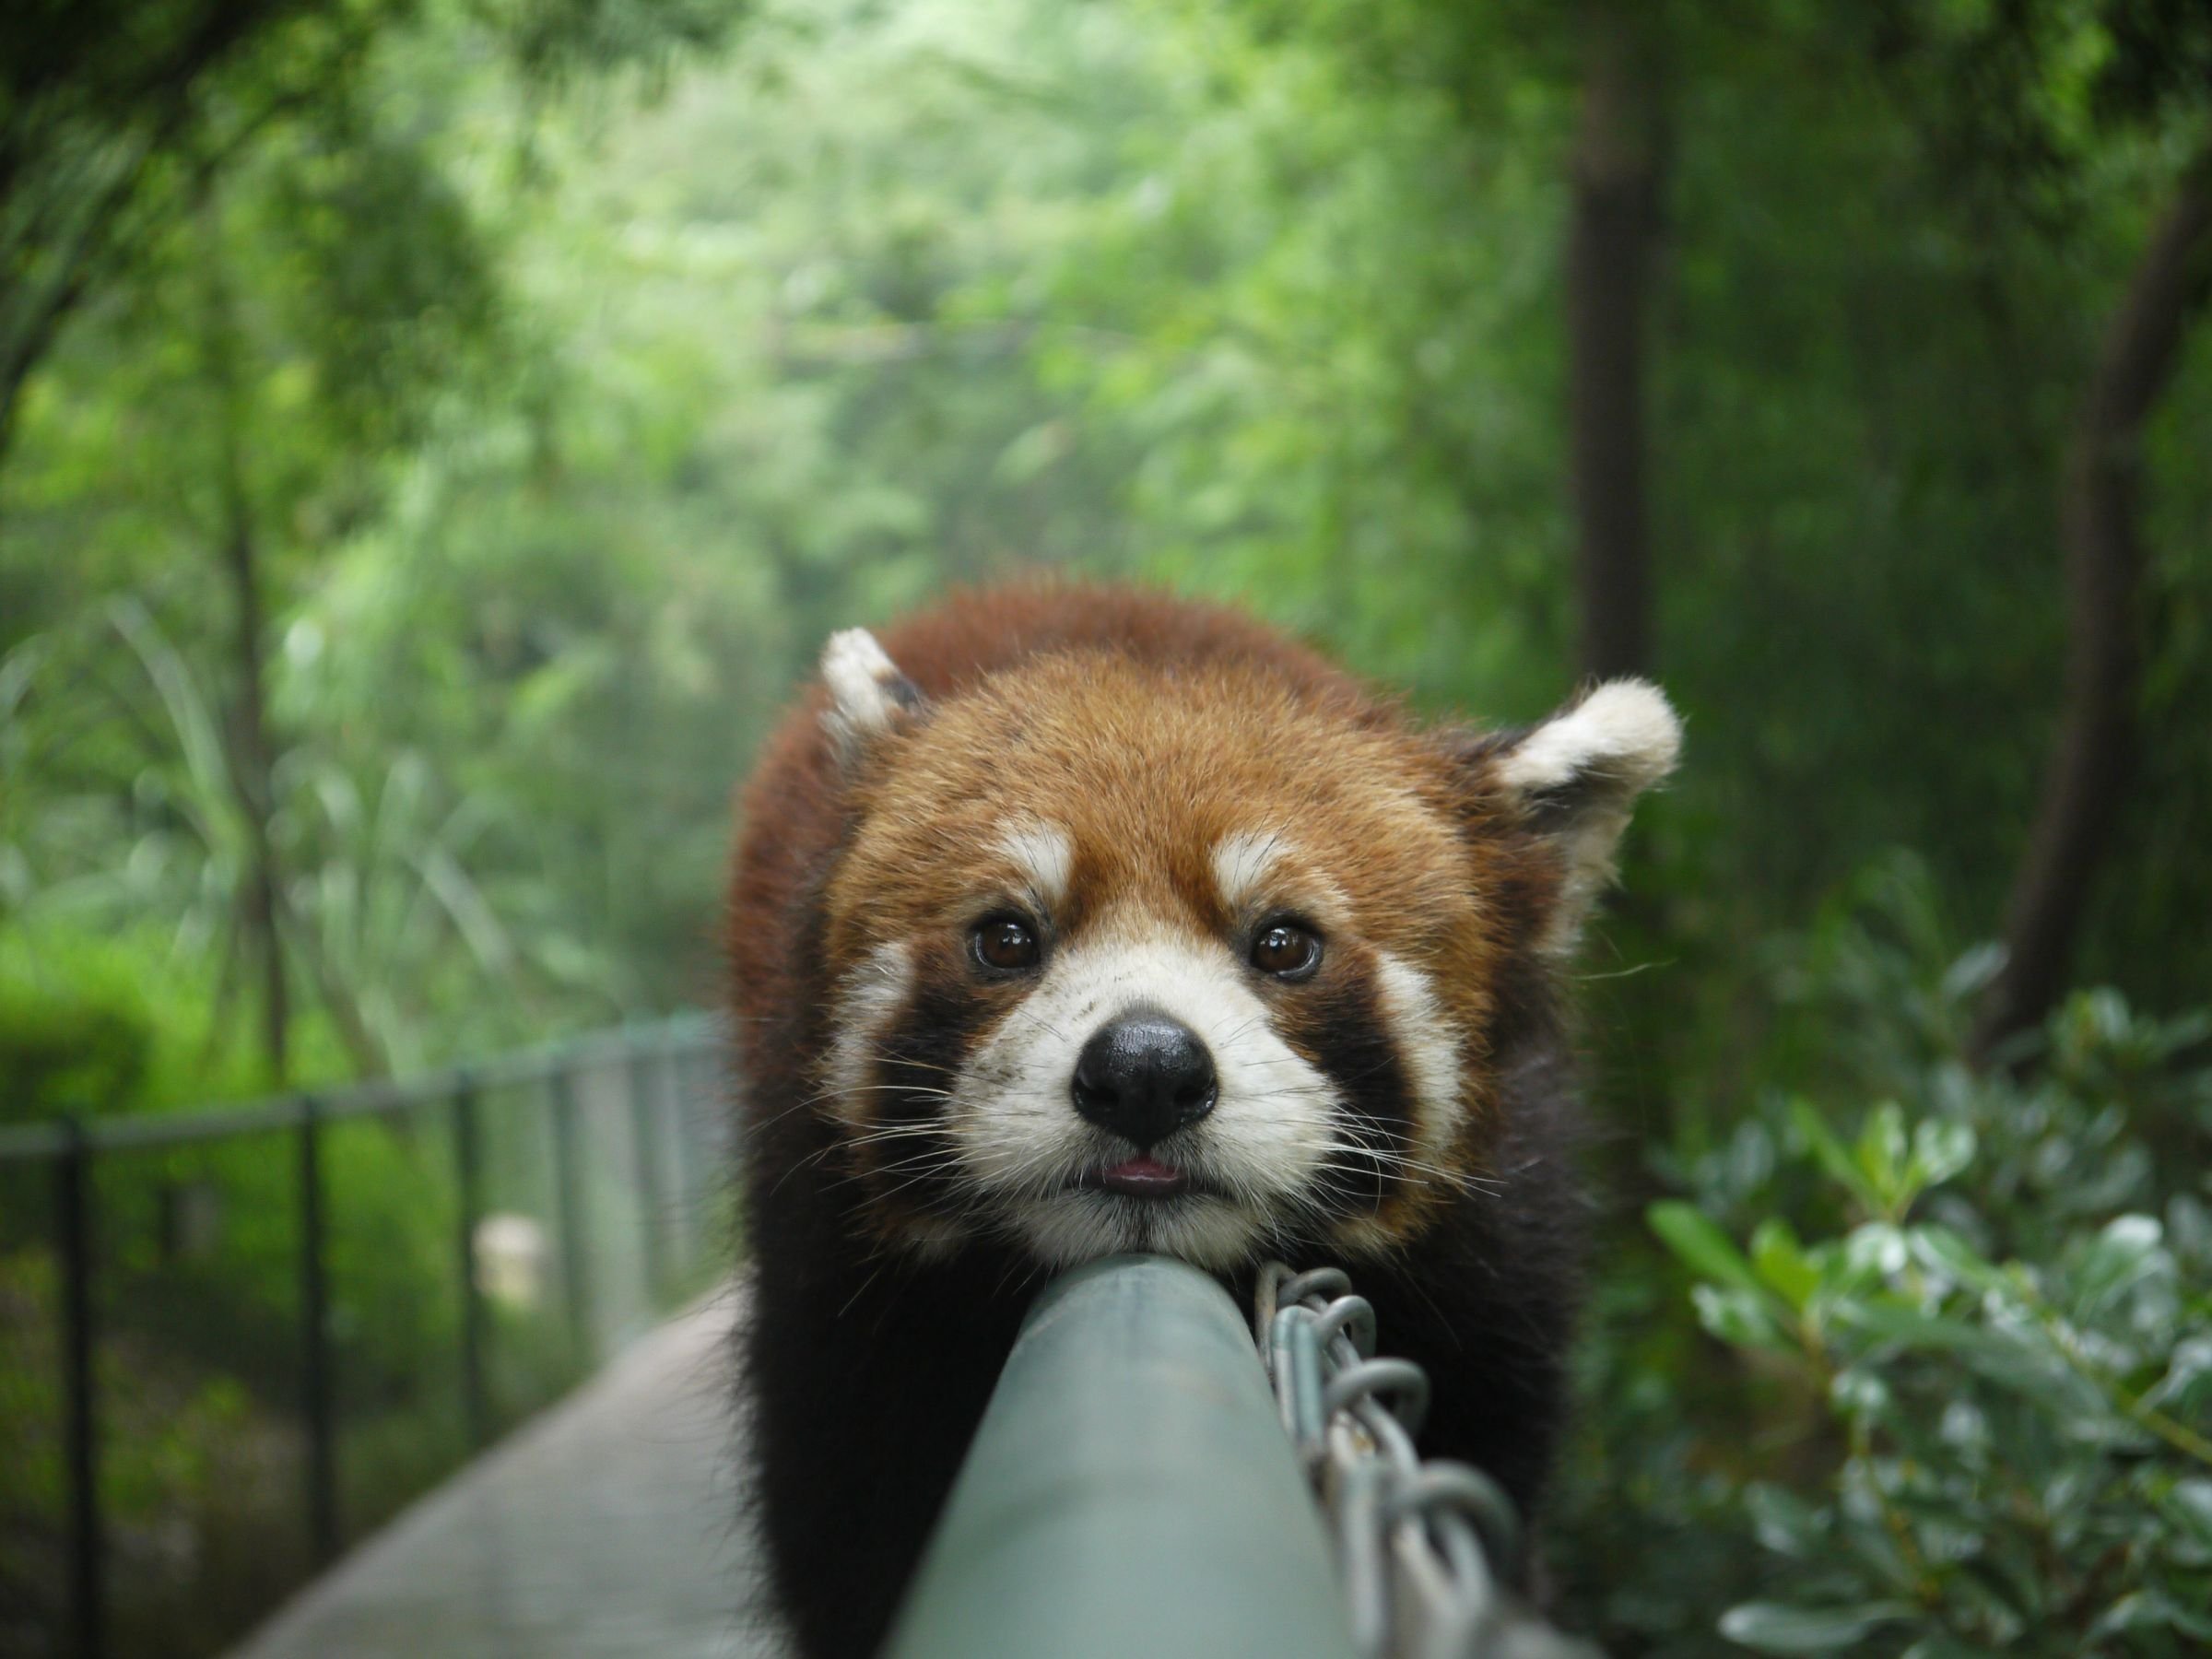 Monorail panda